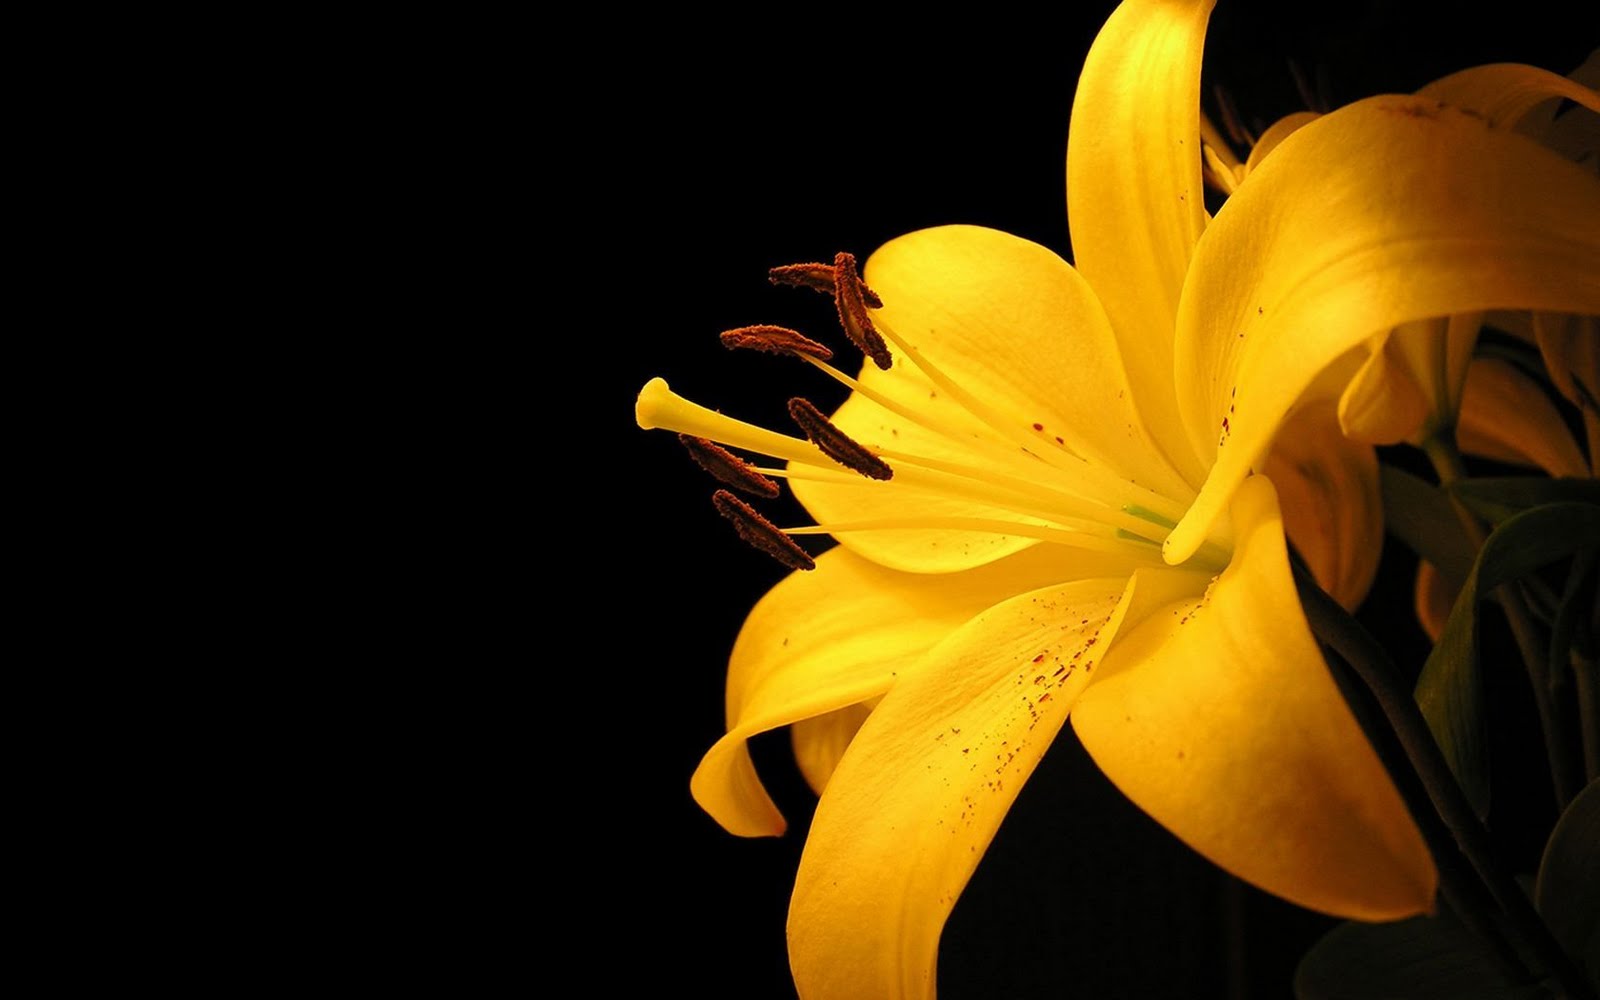 http://2.bp.blogspot.com/-4Tpjyb3pUJo/Tj7QPS8Mr4I/AAAAAAAAFo4/zI8-g3zVLmo/s1600/yellow_lily_flower_wallpaper.jpg